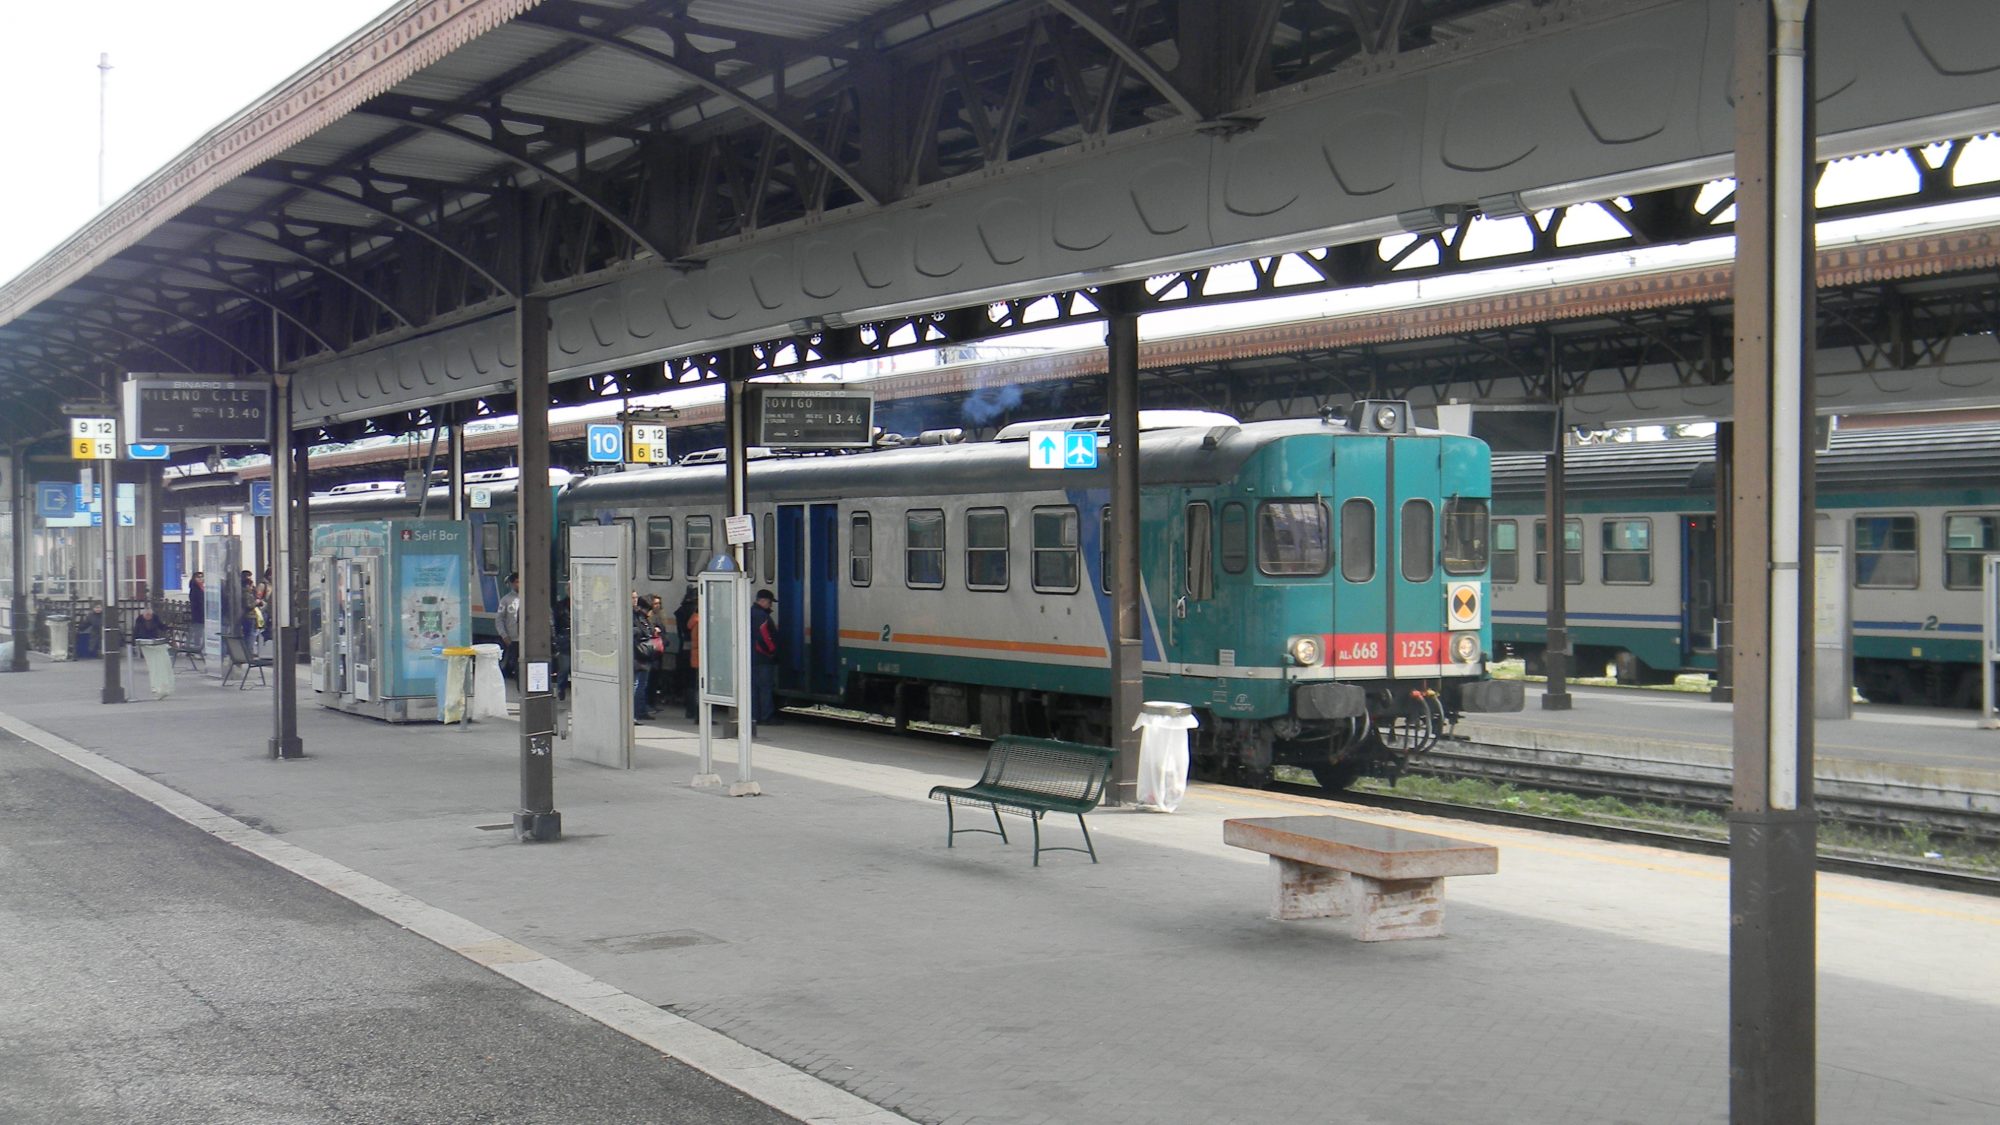 An Italian traain in Verona Porta Nova Train Station. A Dolomites train project could be ready for the 2026 Olympics.